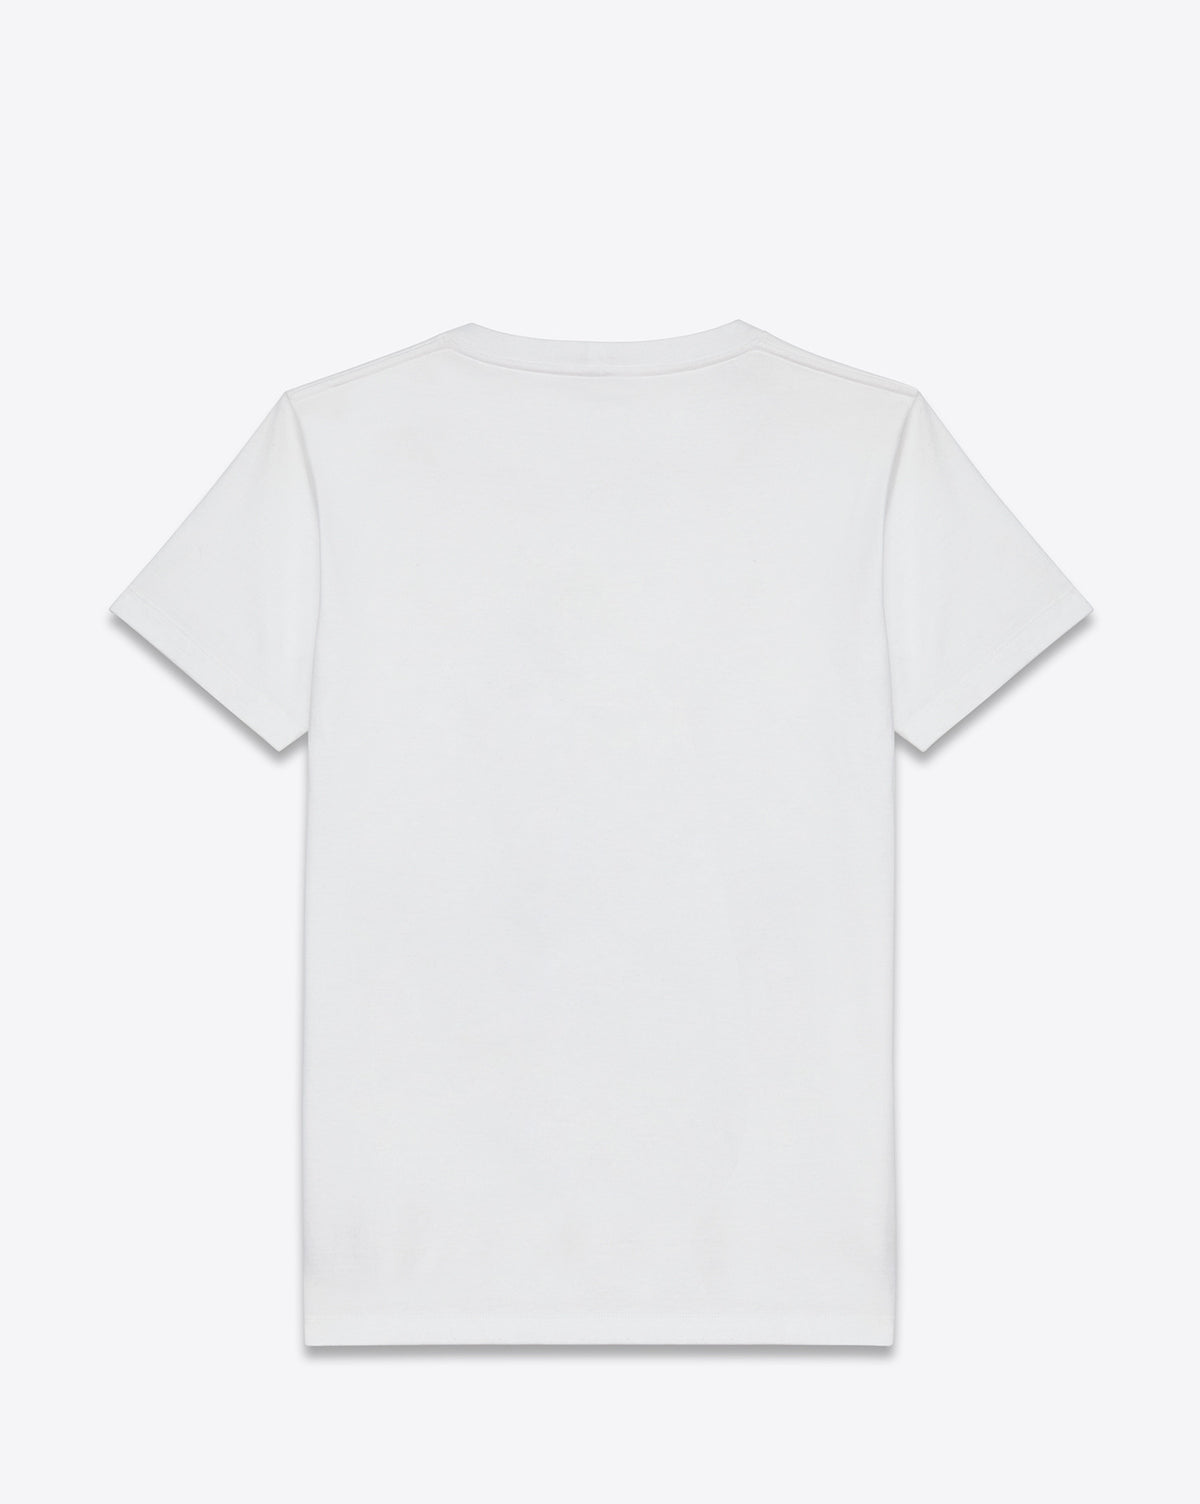 Wavy T-Shirt White - DEMEANOIR - 2